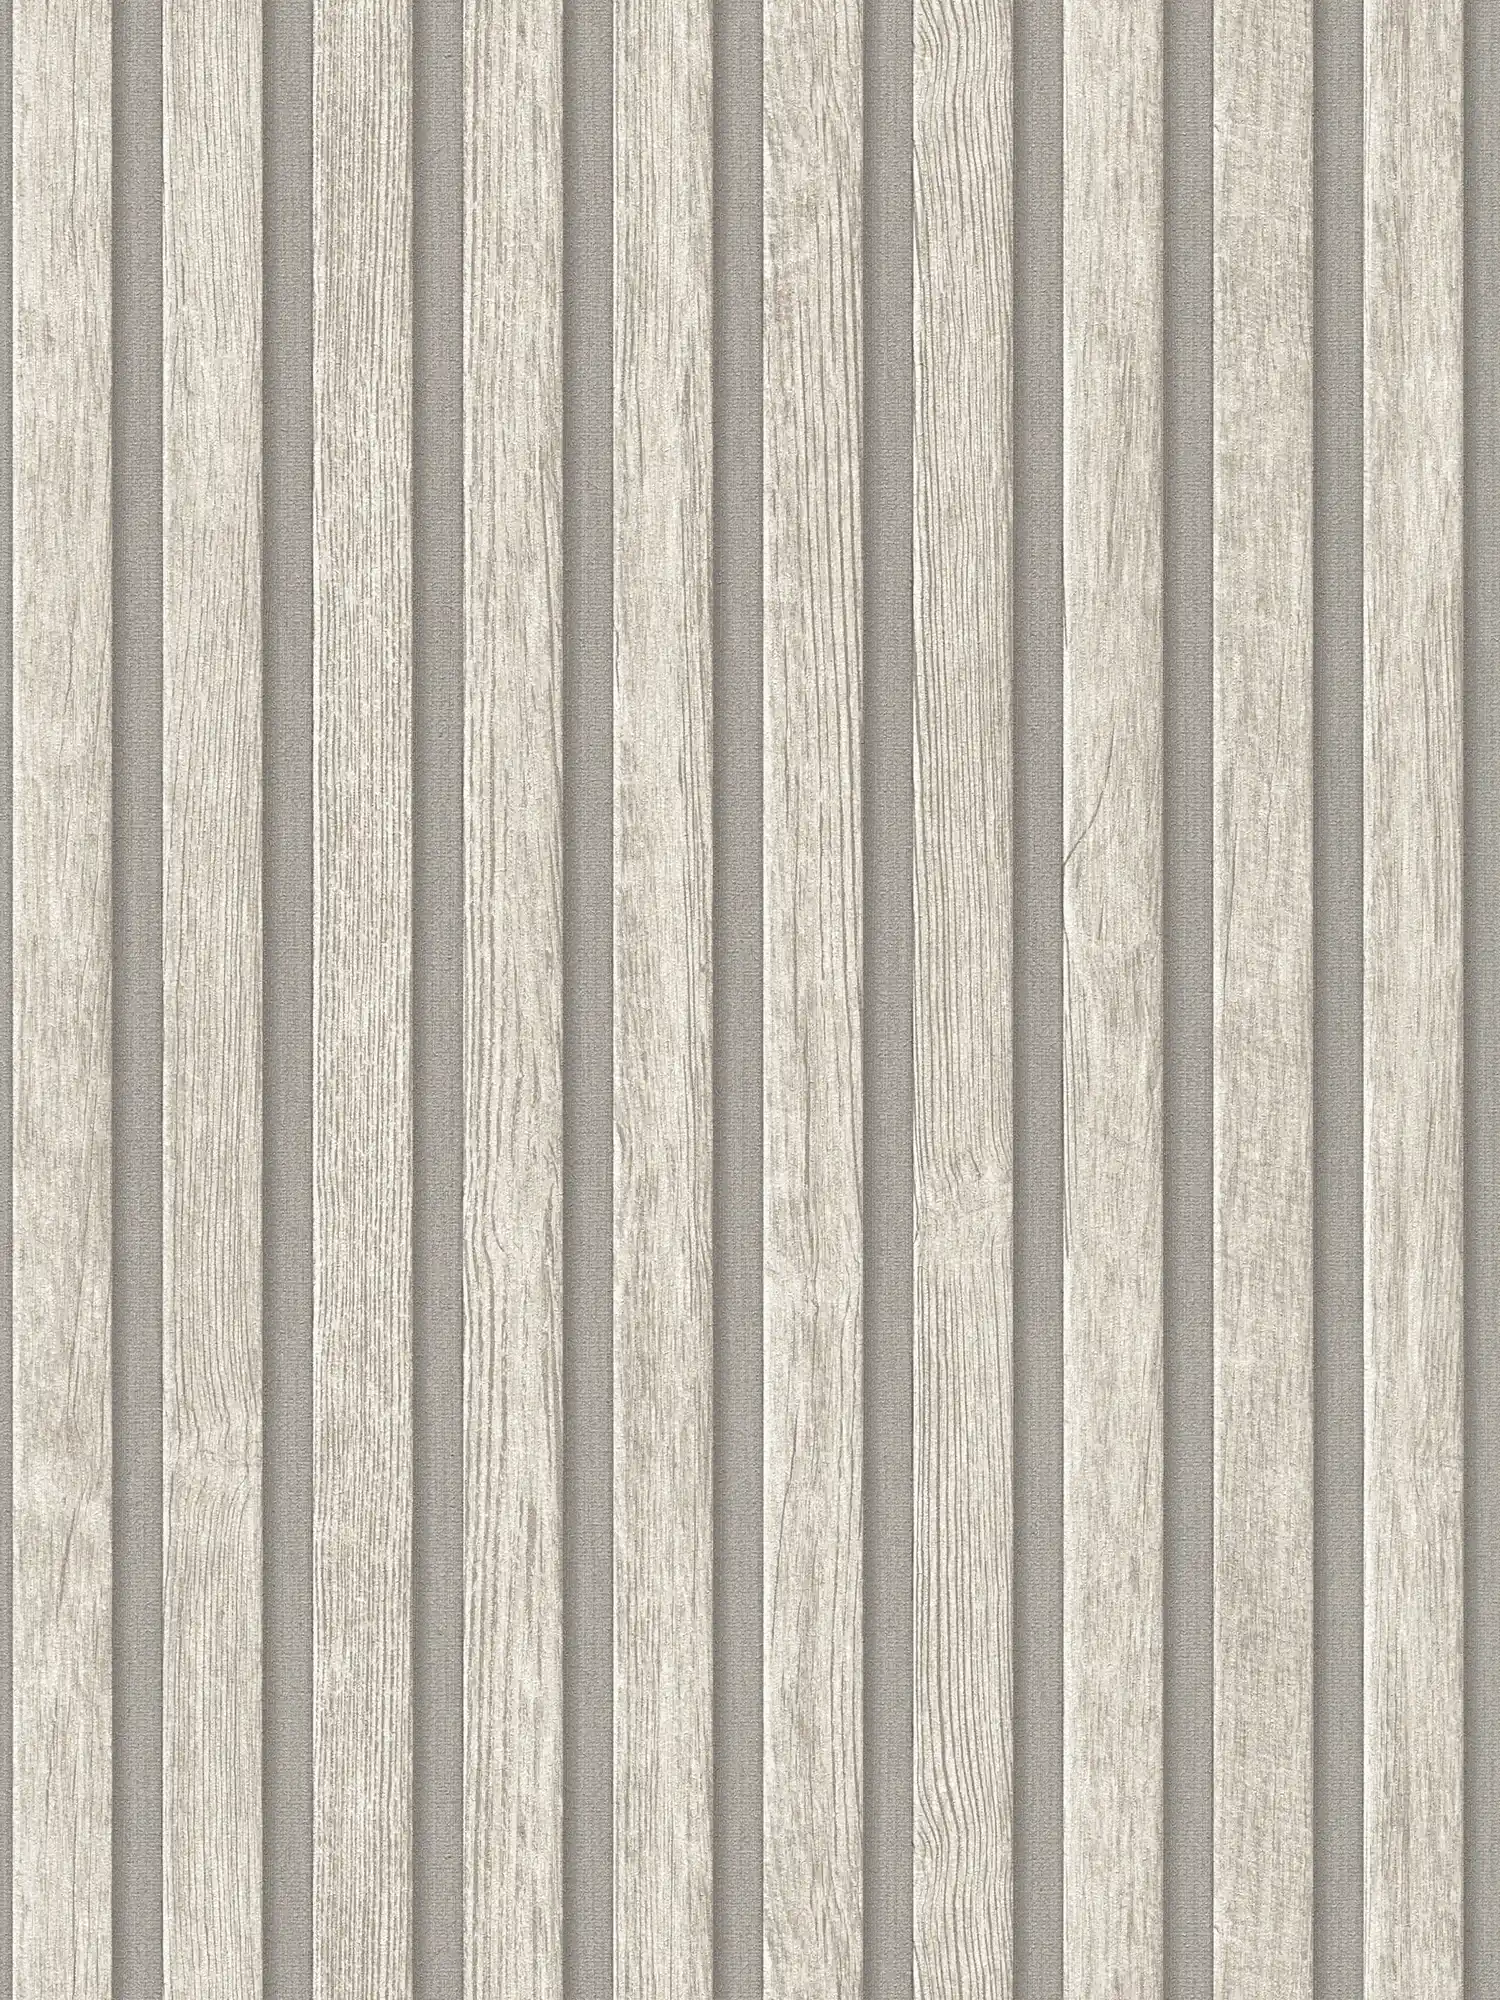         Vliestapete mit Holzpaneel-Muster – Grau, Creme
    